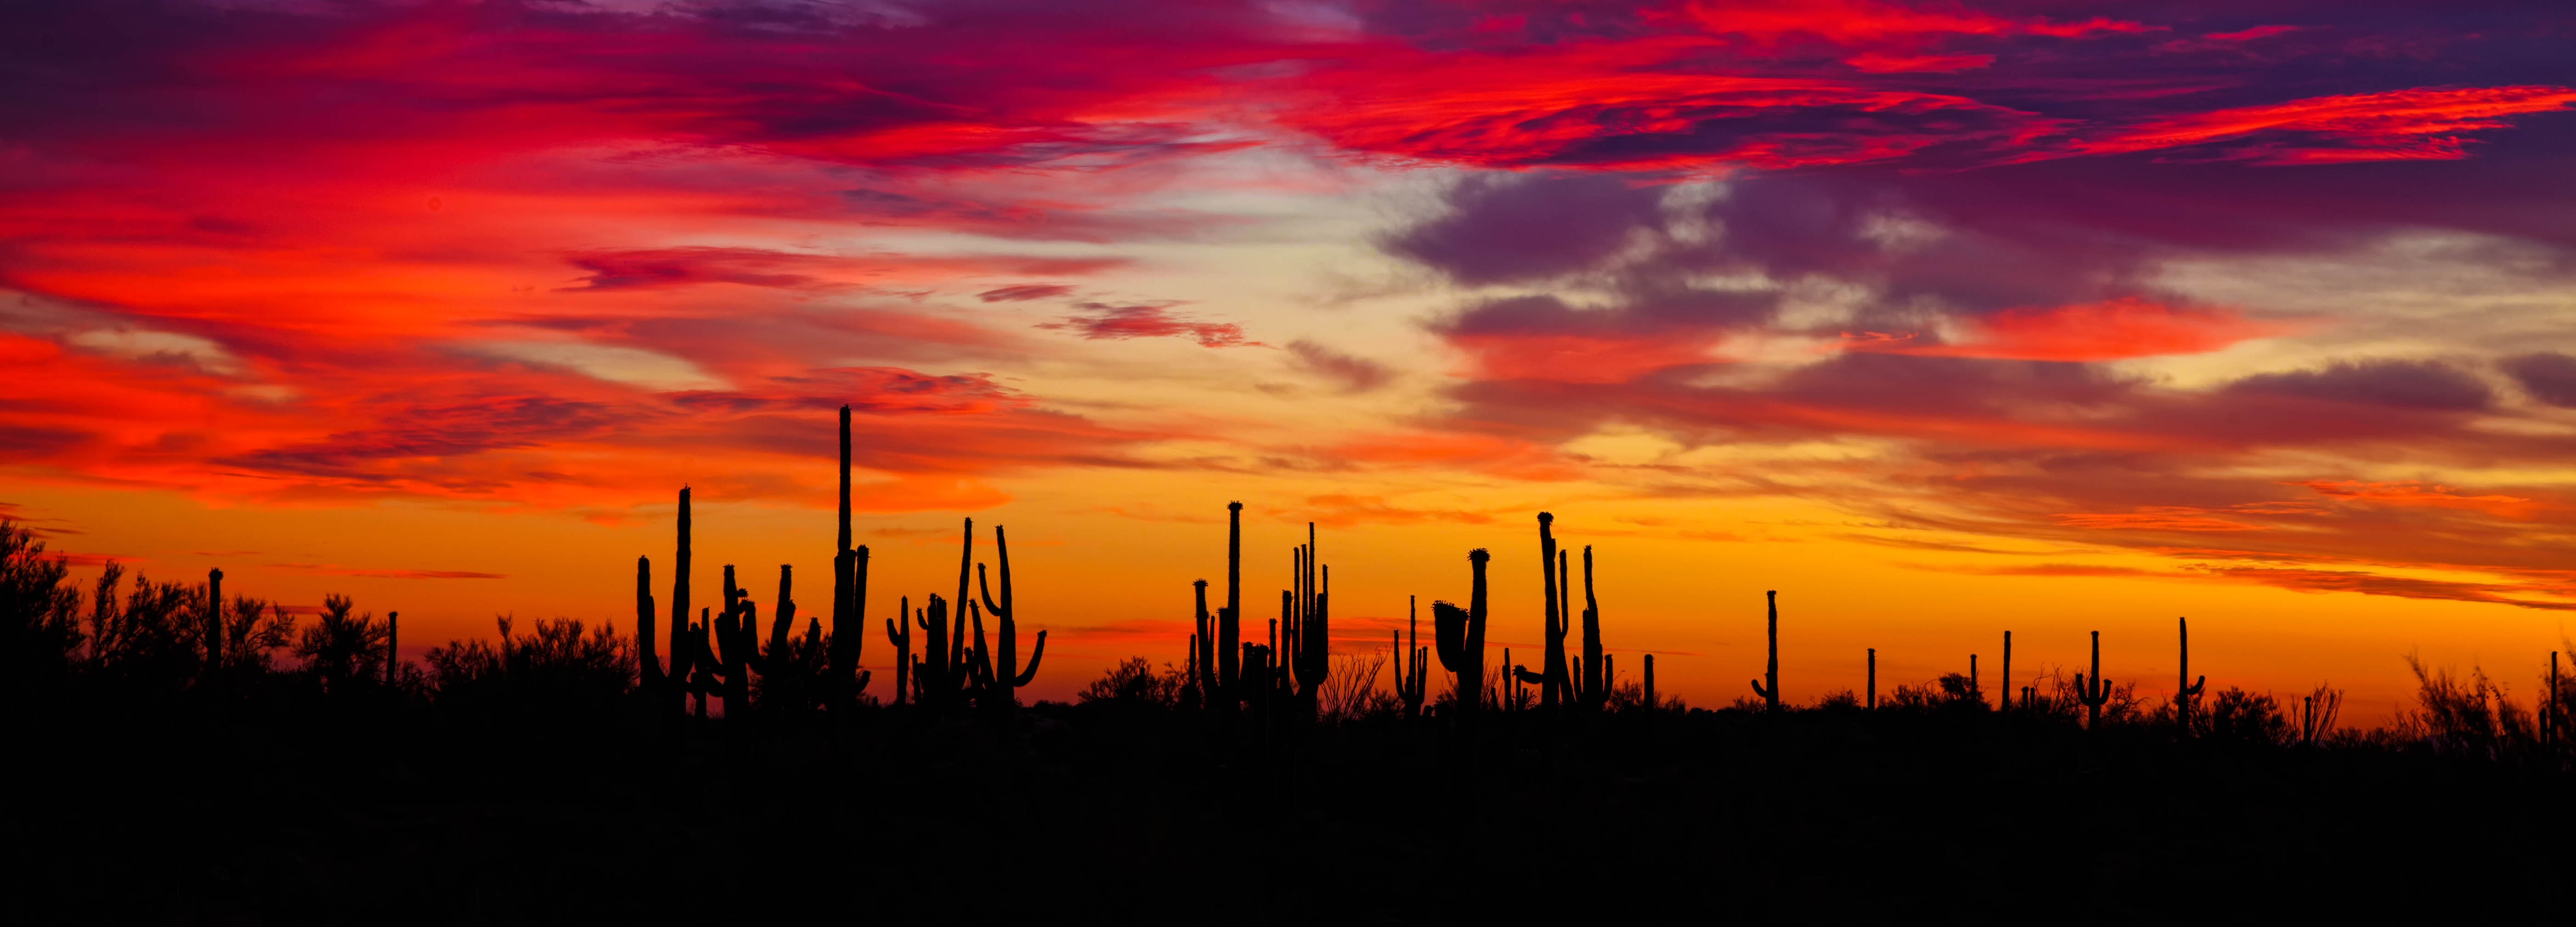 arizona, cactuses, nature, sunset, silhouettes lock screen backgrounds